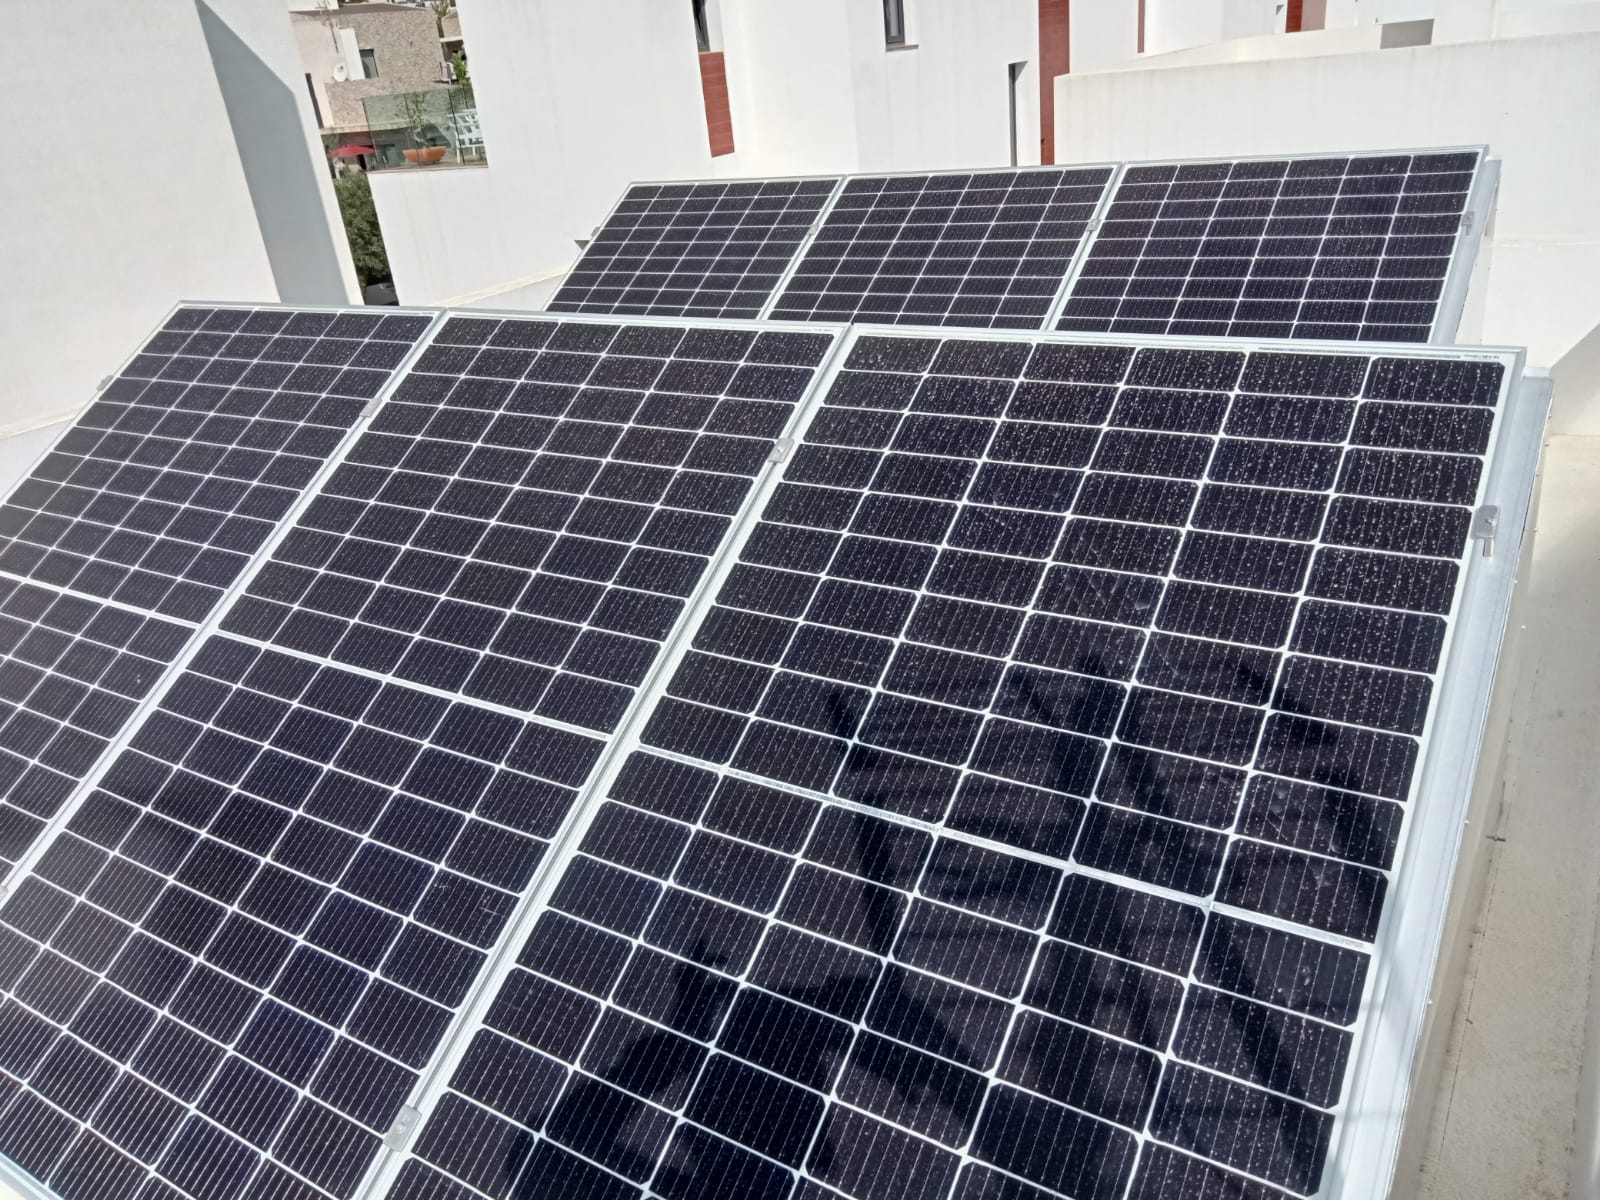 10X 380 wp Solar Panels, Polop, Alicante (Grid system)